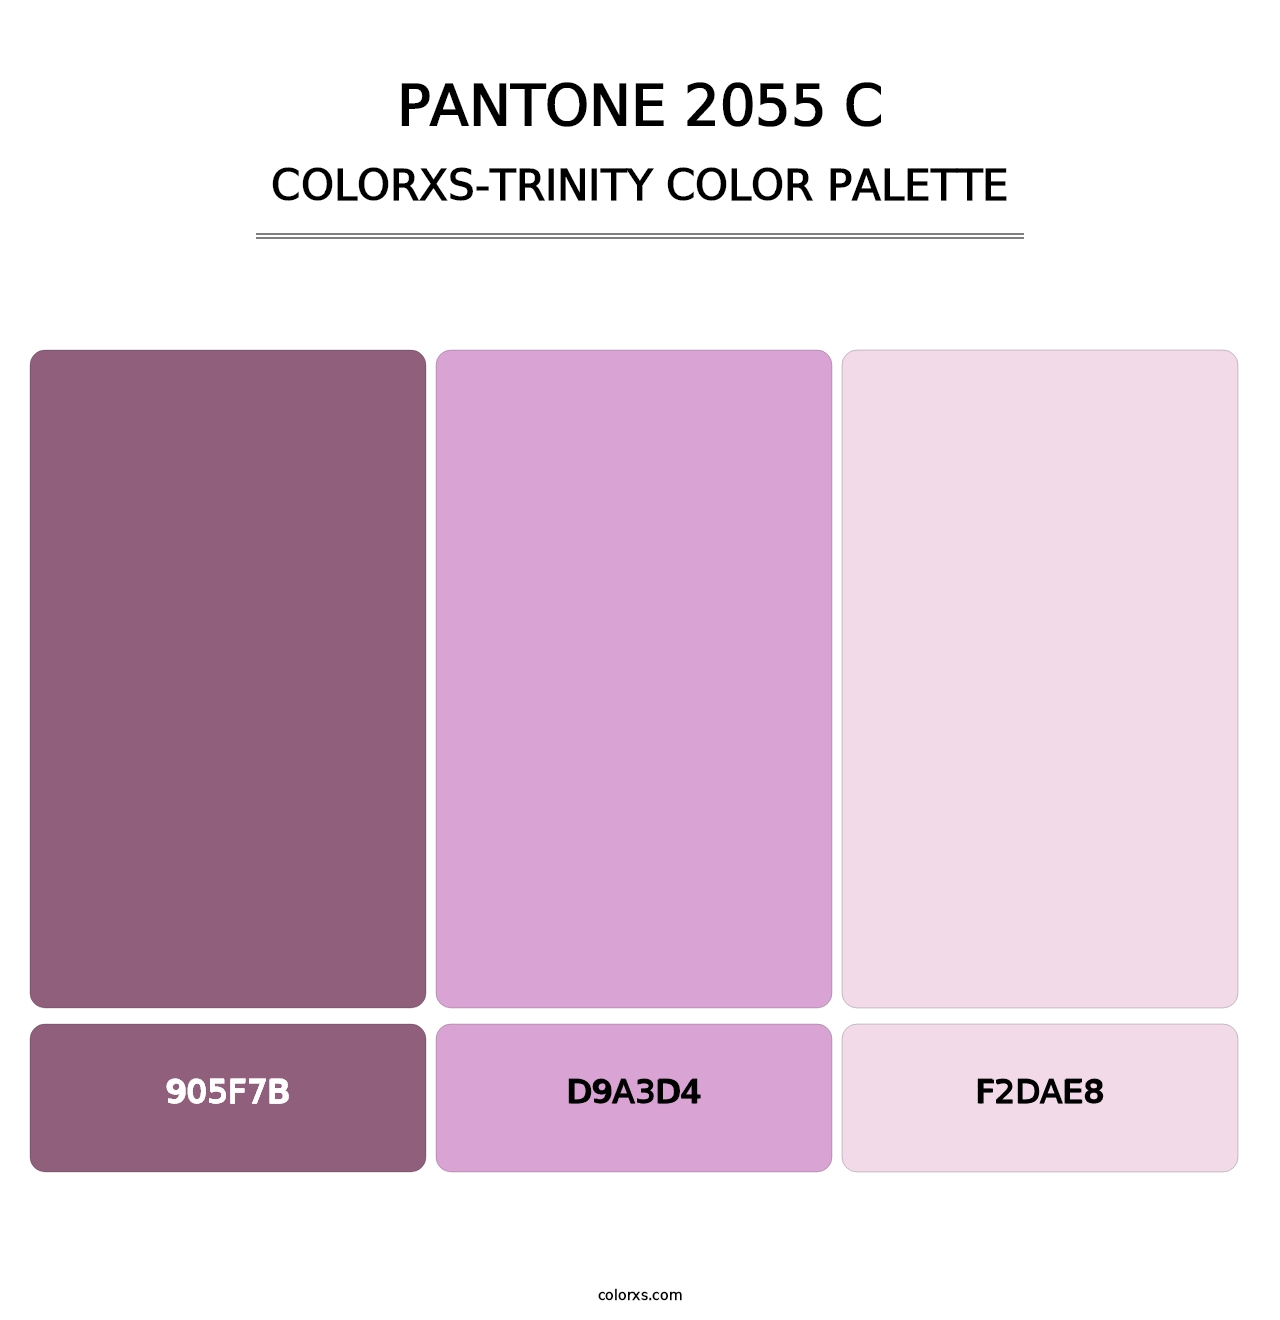 PANTONE 2055 C - Colorxs Trinity Palette